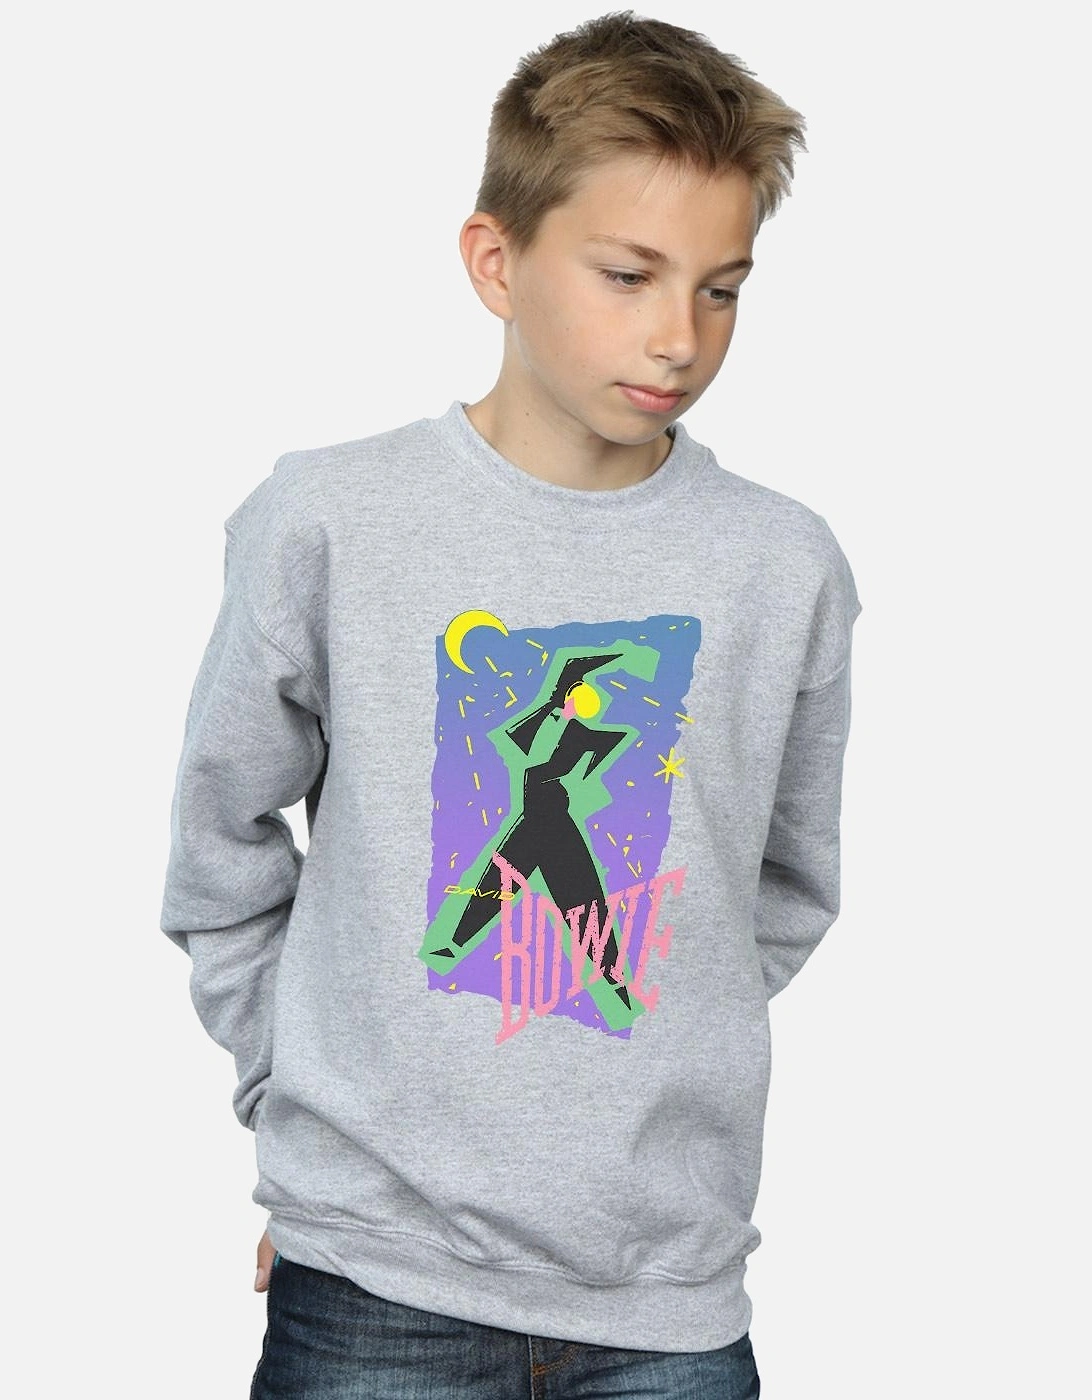 Boys Moonlight Dance Sweatshirt